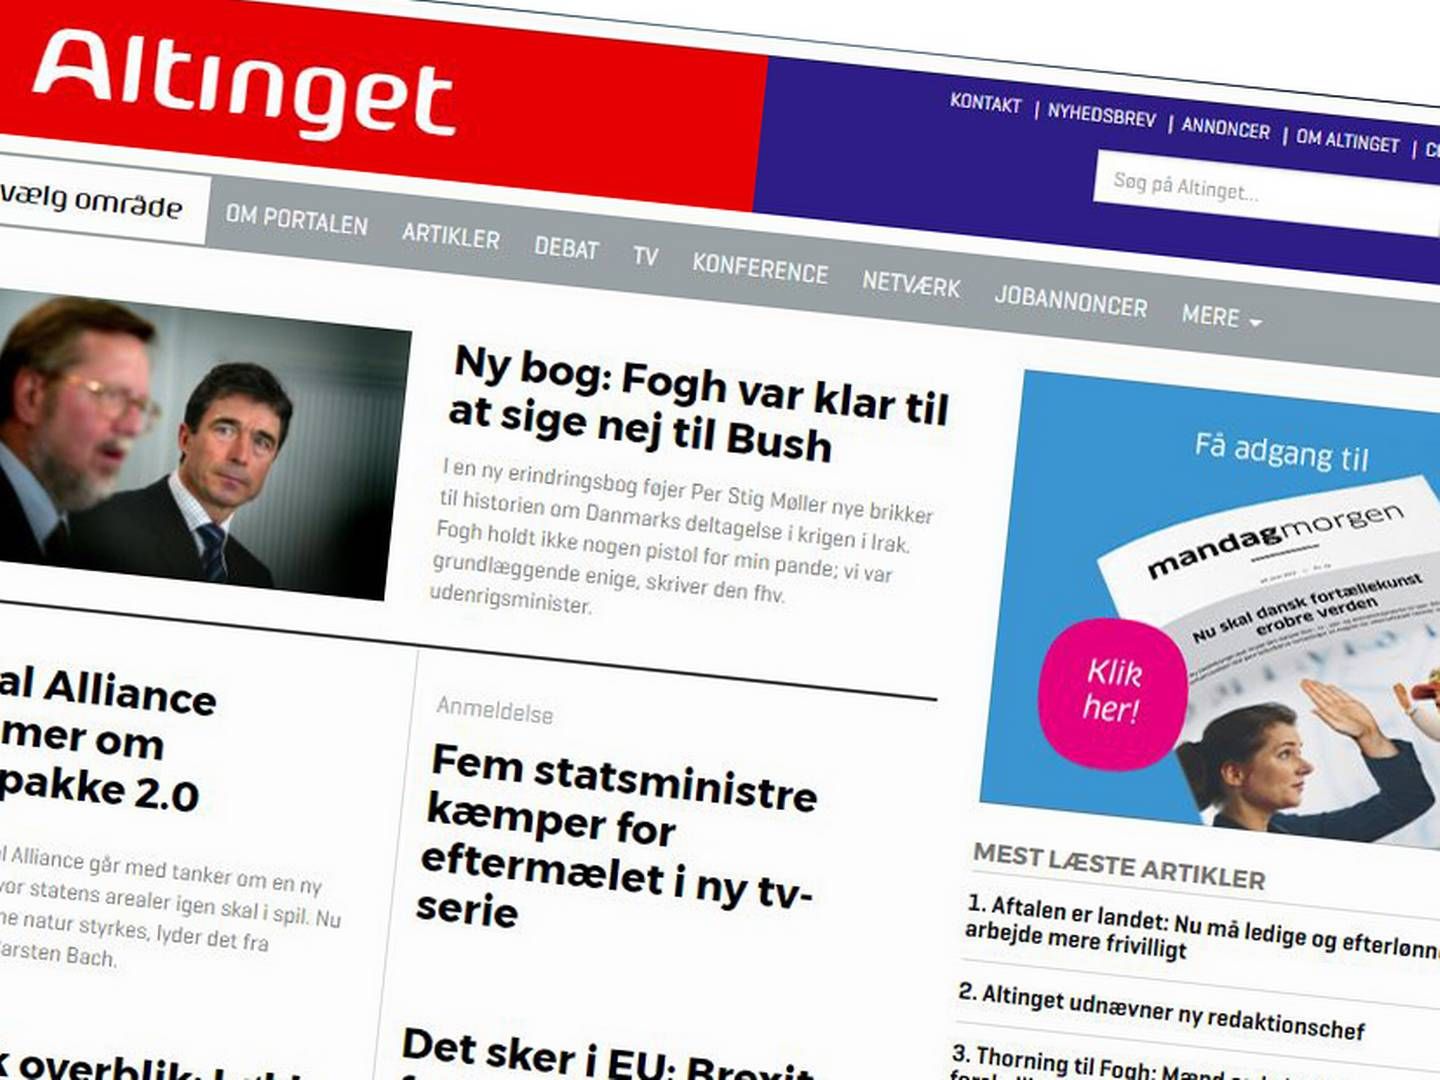 Foto: Screenshot fra Altinget.dk